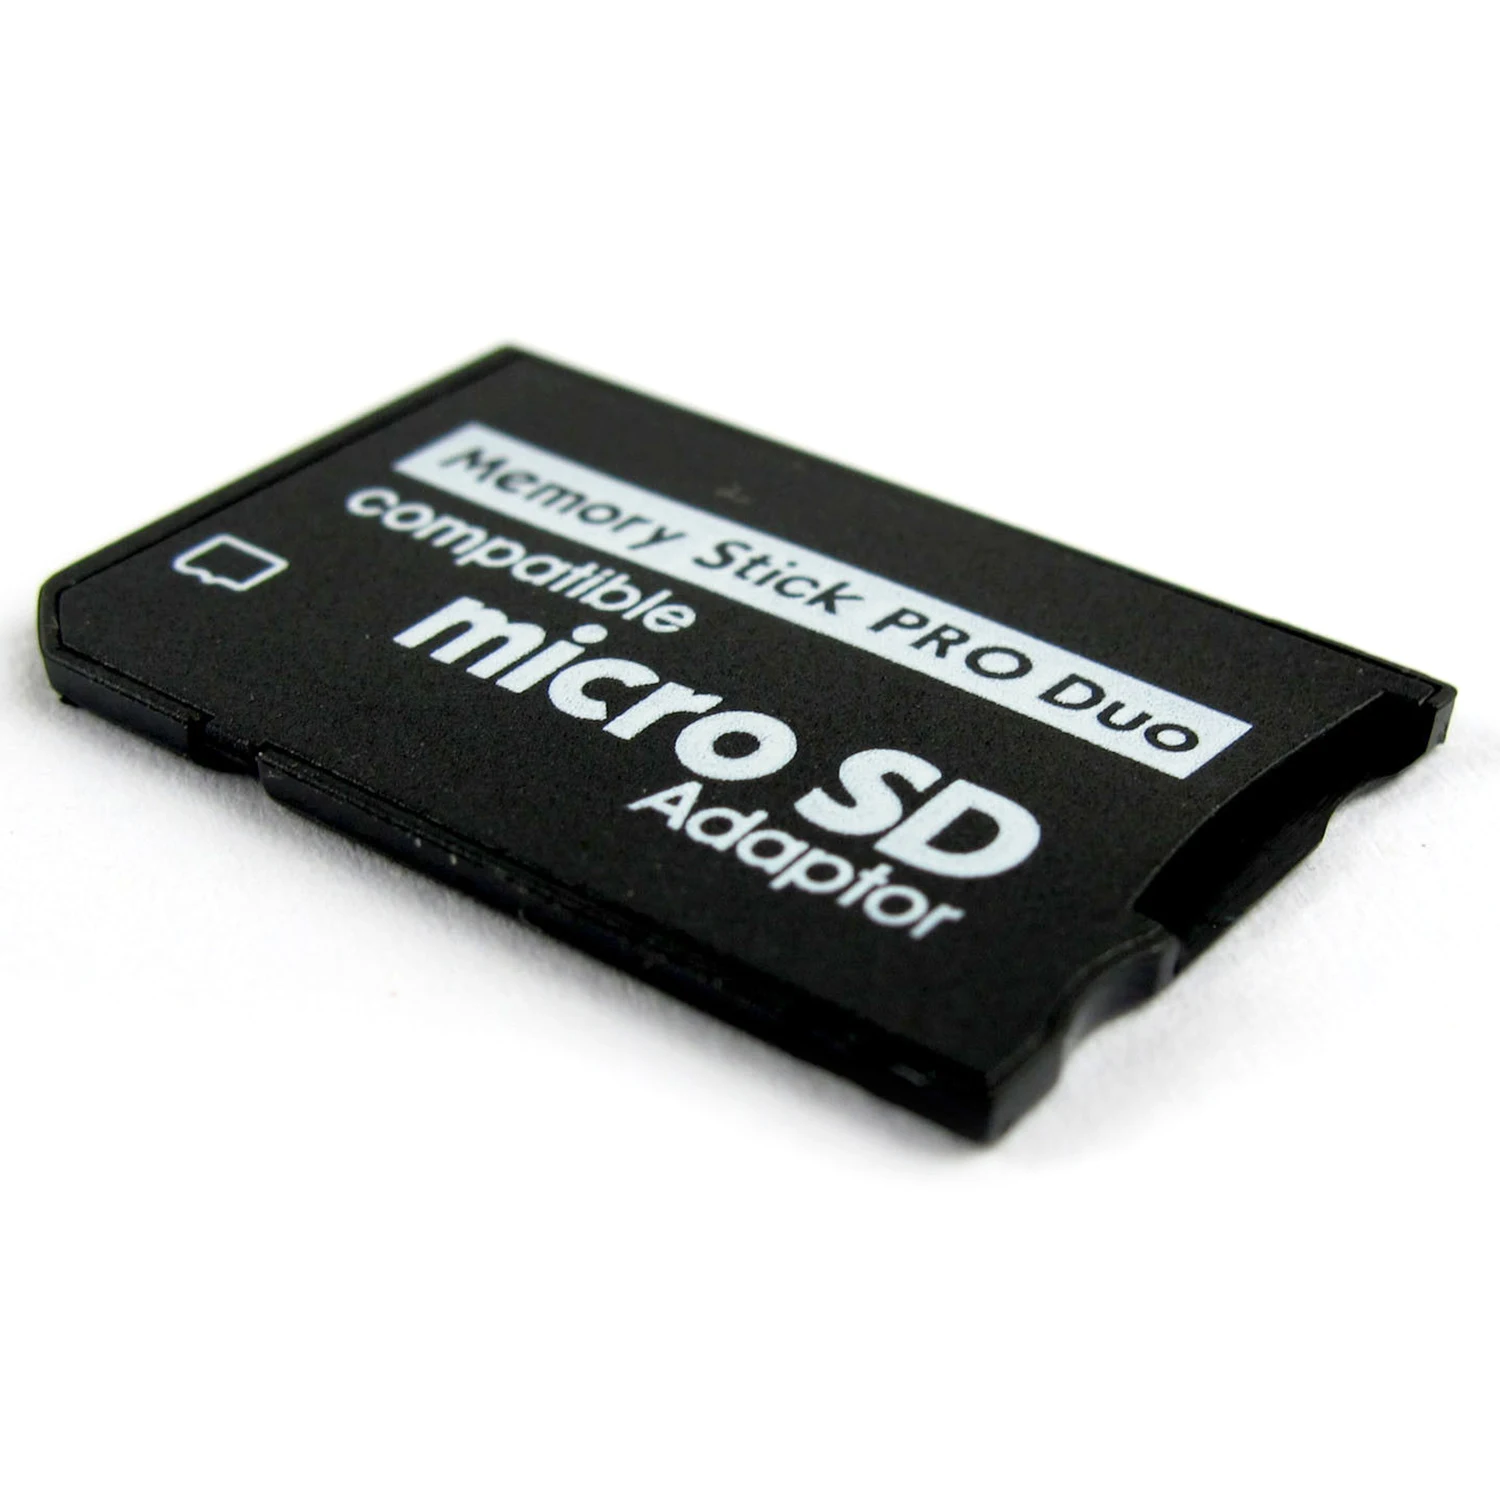 Memory Stick Pro Duo Mini MicroSD TF MS адаптер SD SDHC Card Reader для sony и psp серии